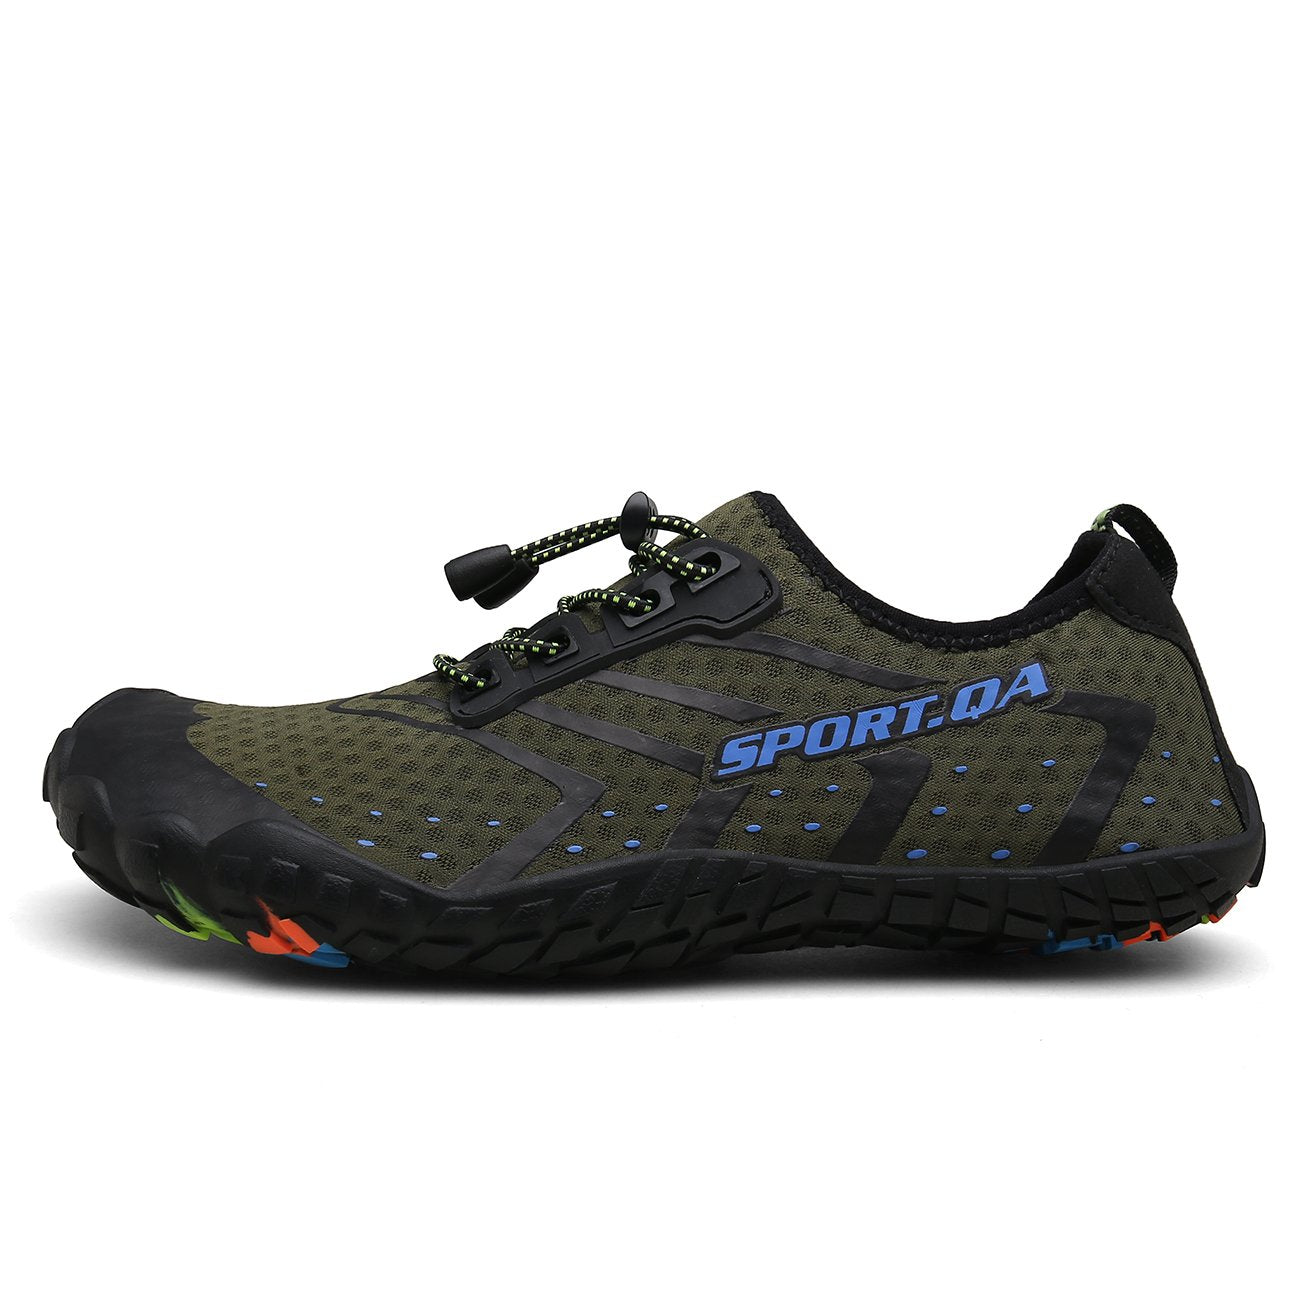 Men's wading shoes mesh hiking shoes water shoes